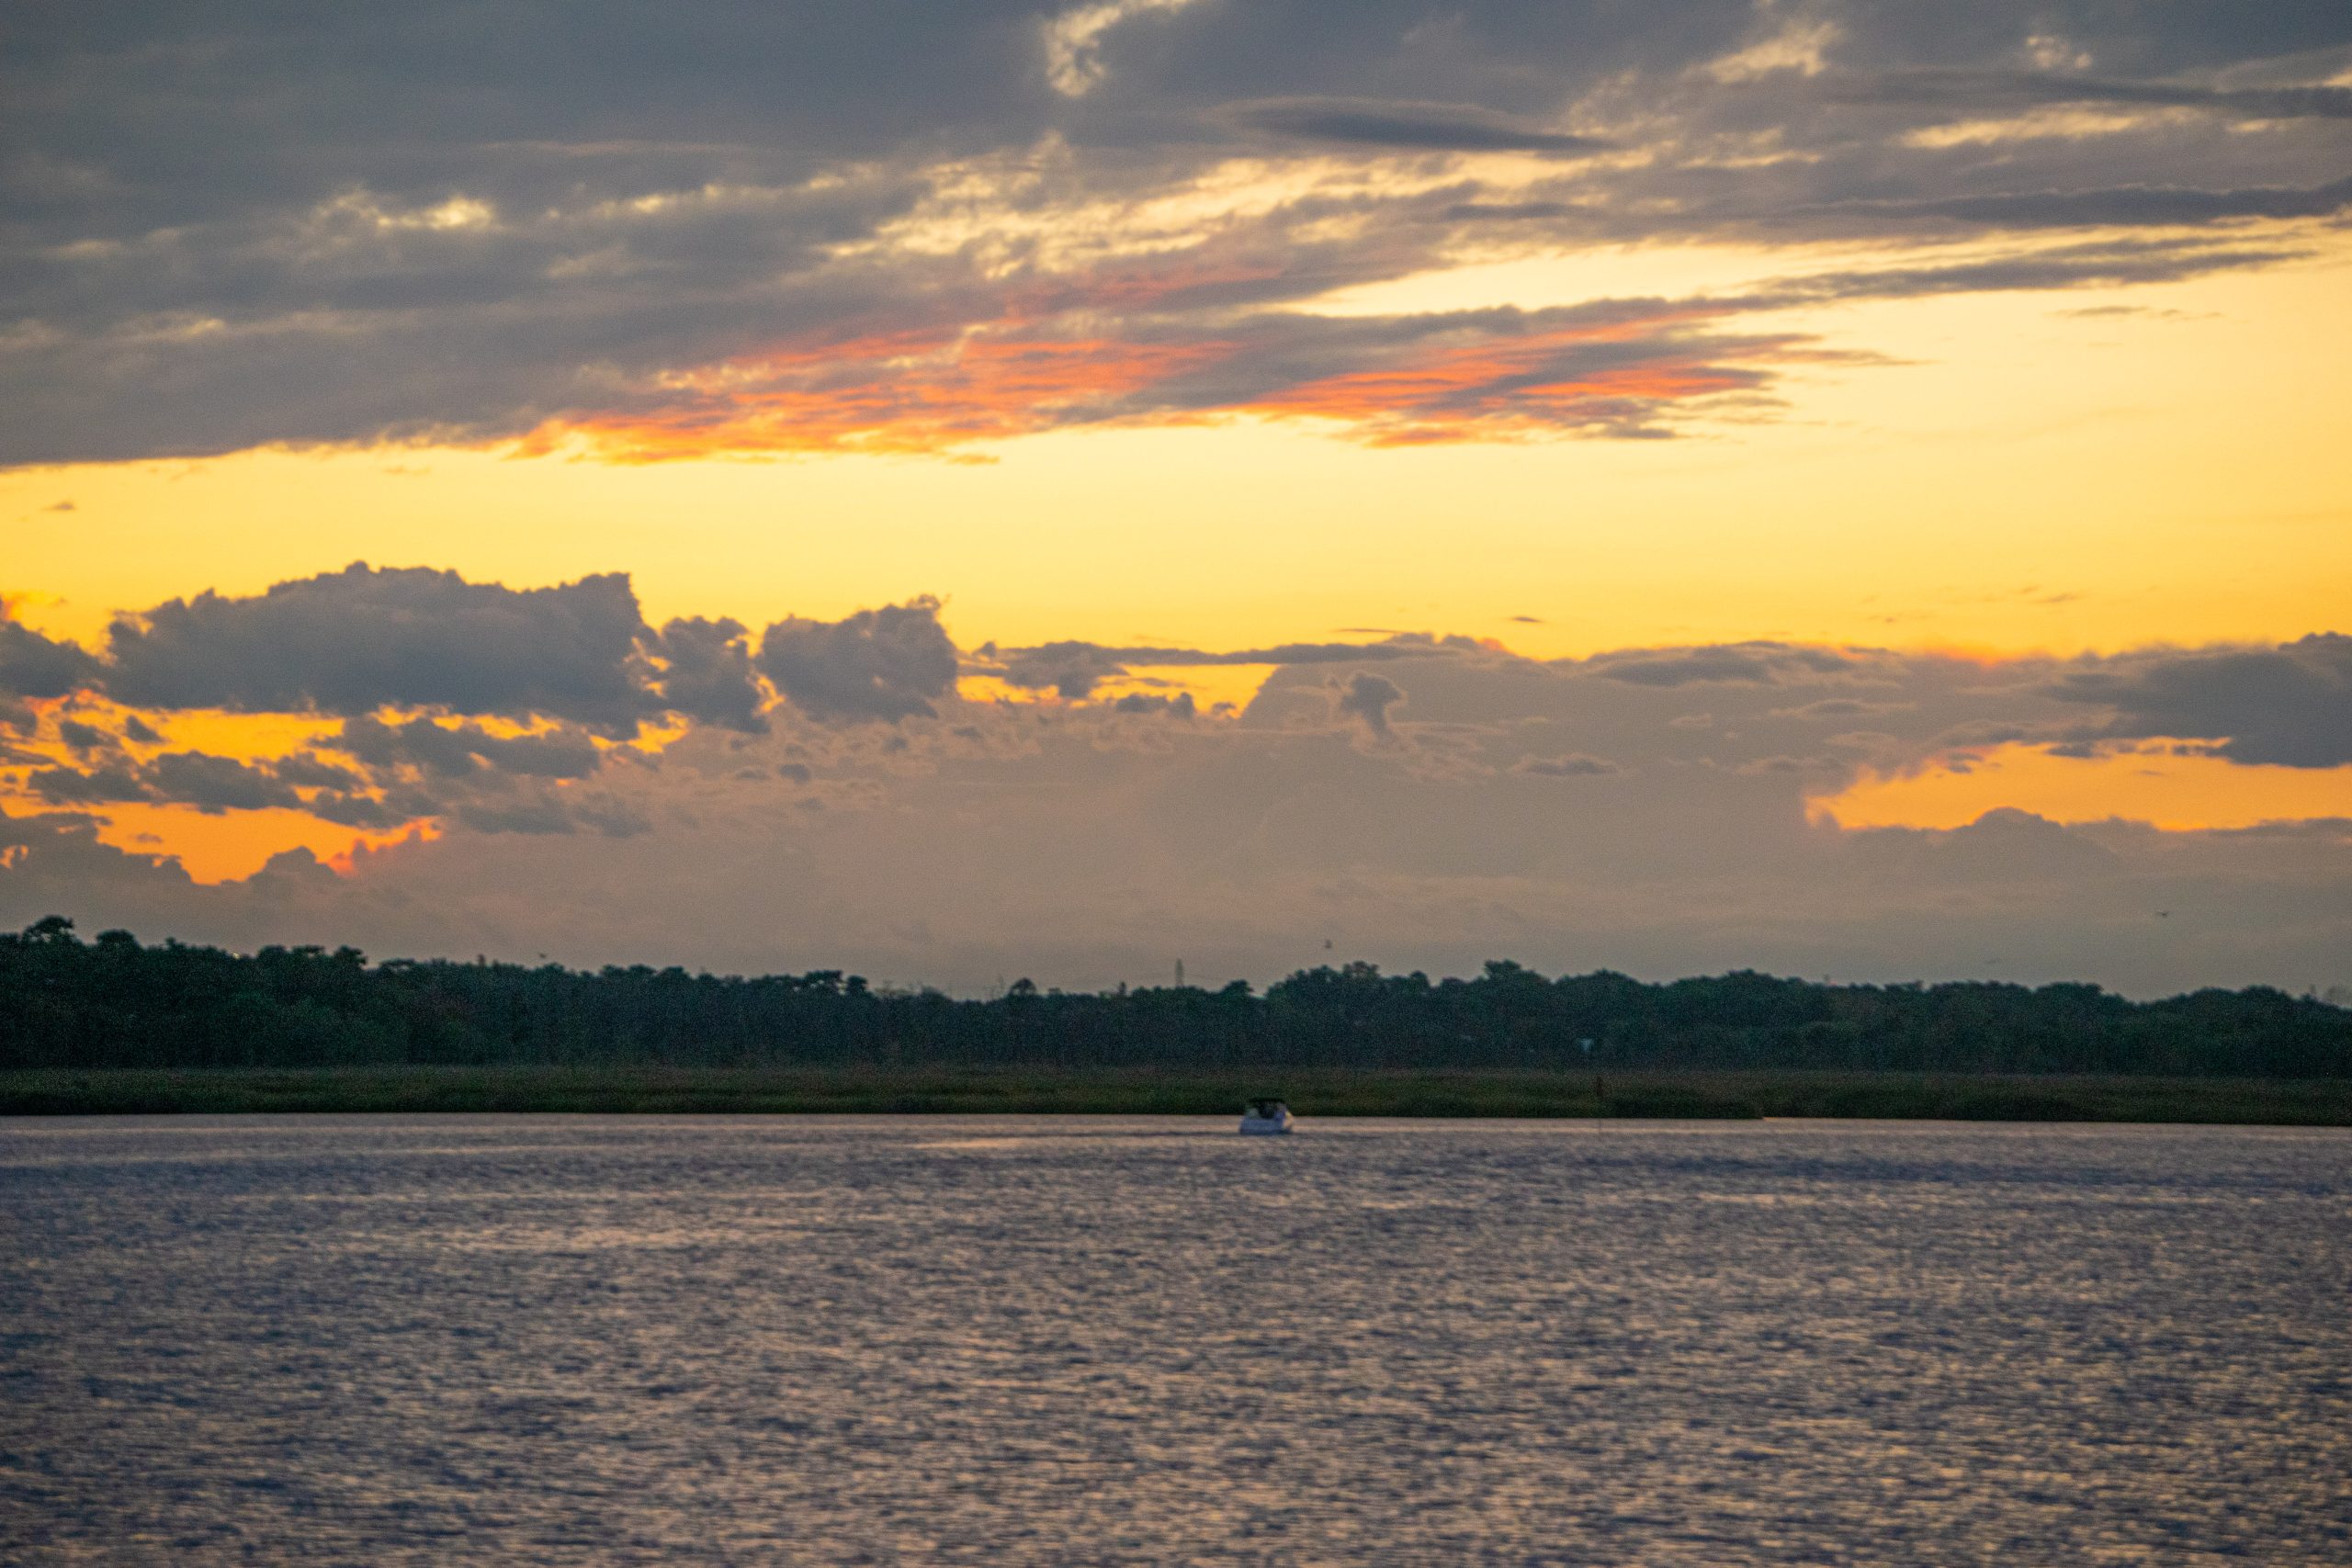 Sunset over the Metedeconk River, from Windward Beach, Brick, N.J., Sept. 26, 2022. (Photo: Daniel Nee)